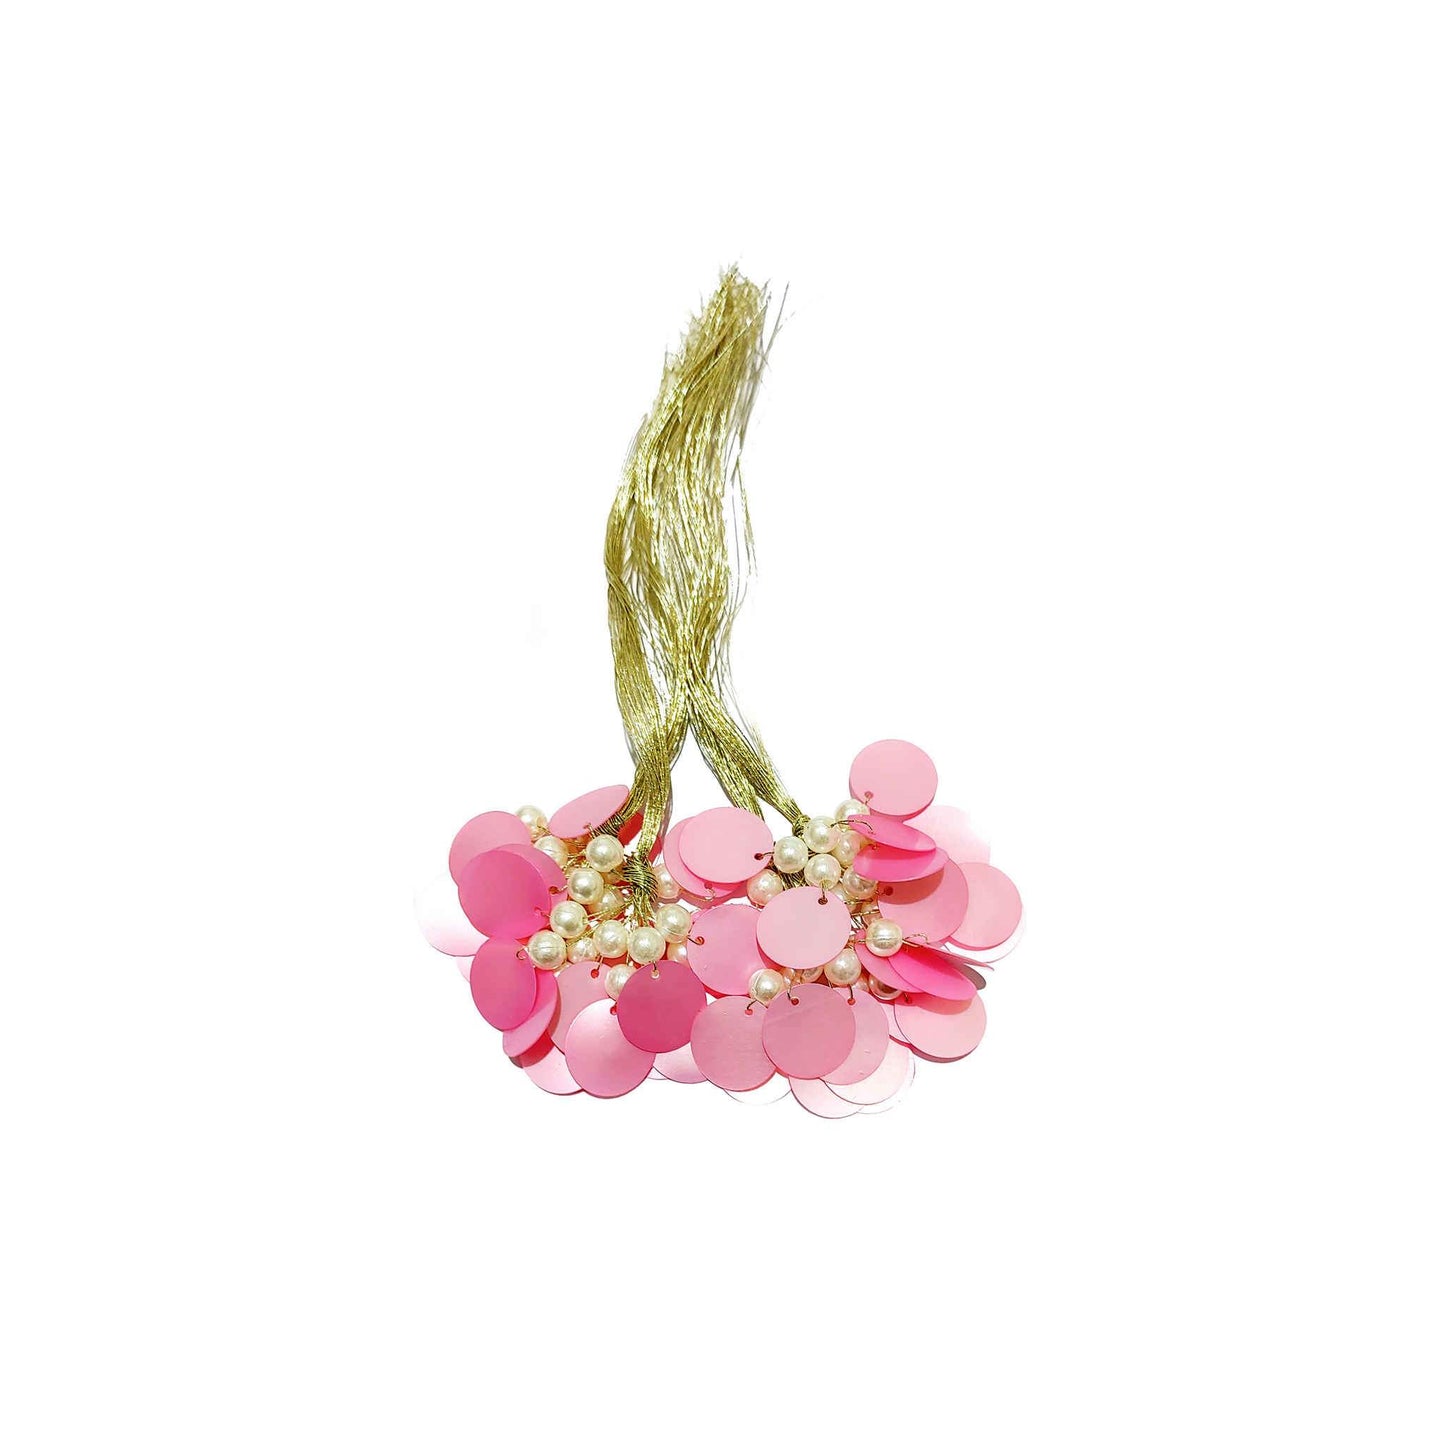 Indian Petals Handmade Sitara Thread Fringe Tassel for Craft, Jewelry or Dressing - Design 856, Baby Pink